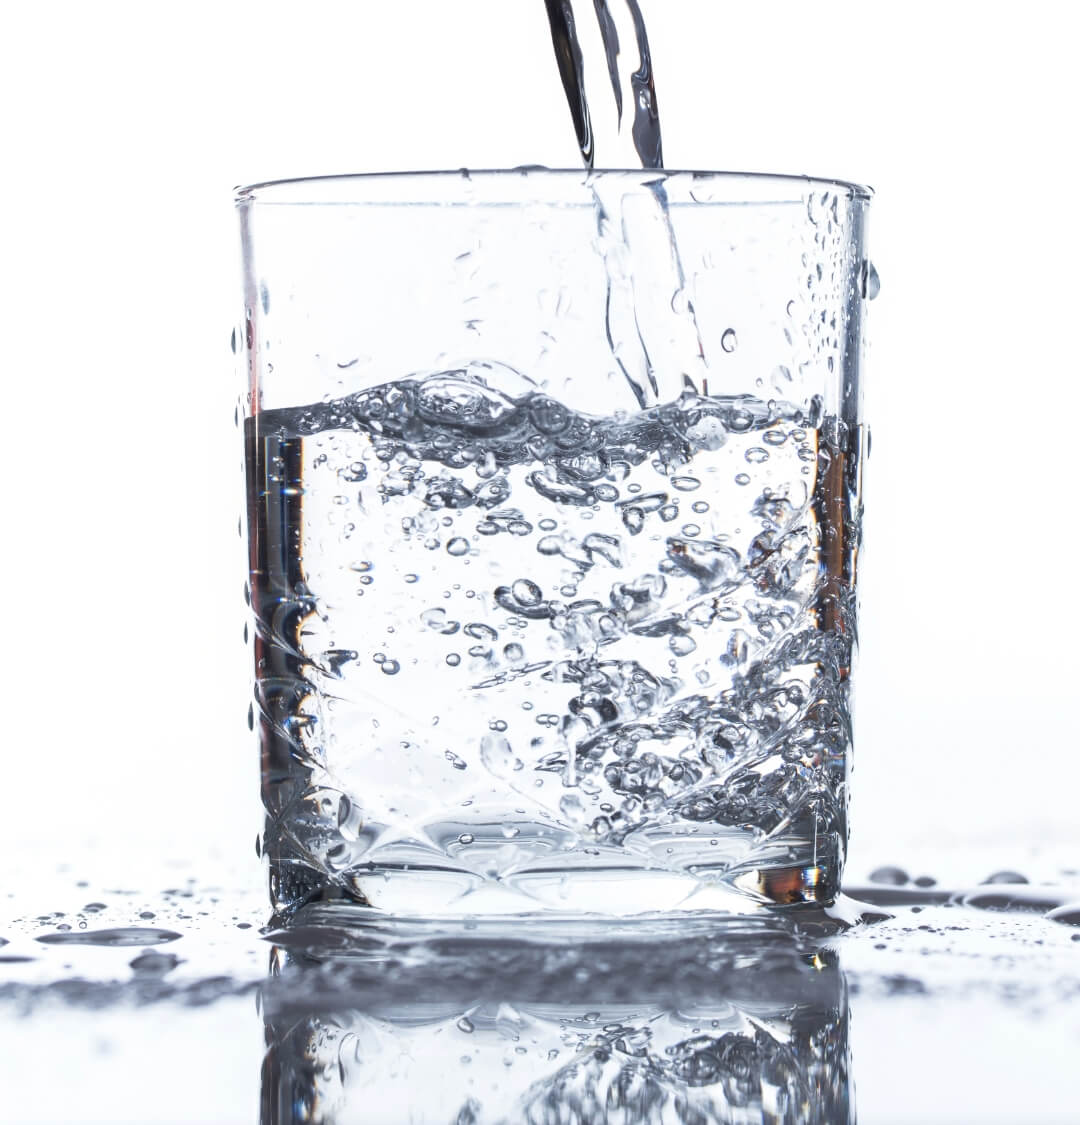 Hydrogenated water